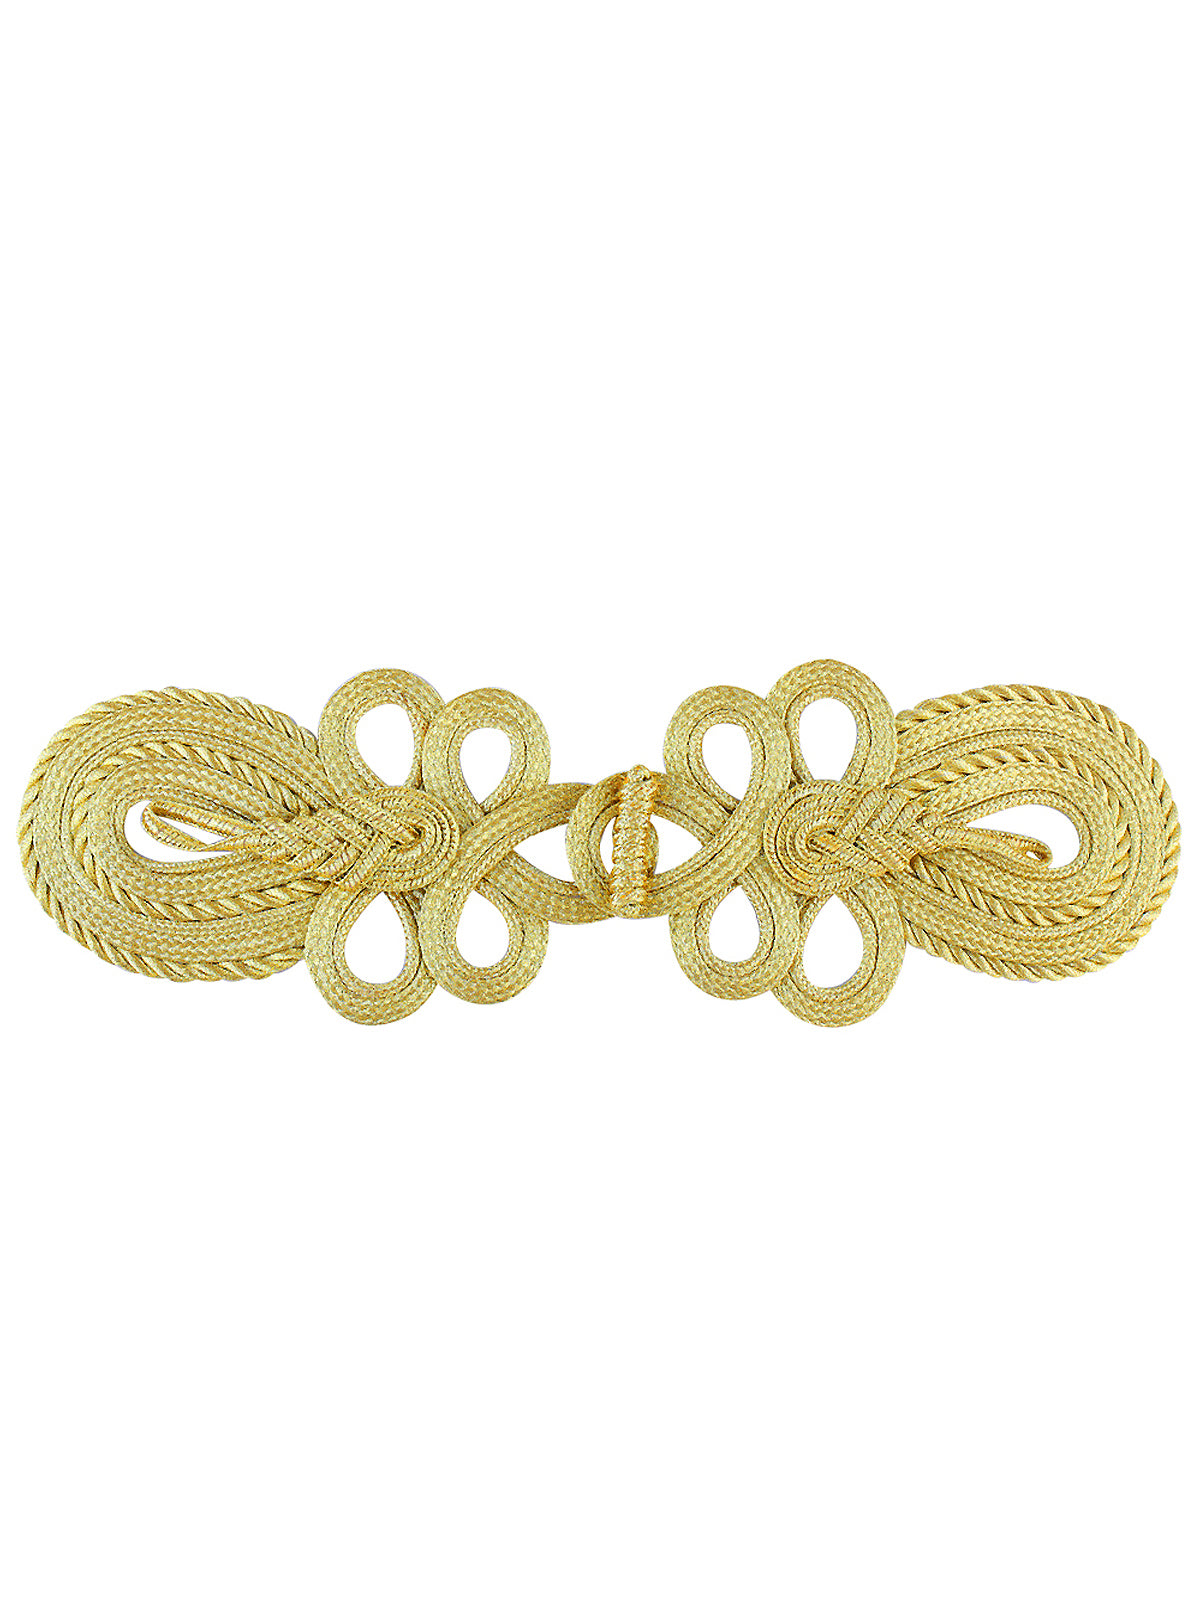 Decorative Metallic Gold Cord Braided Frog Closure